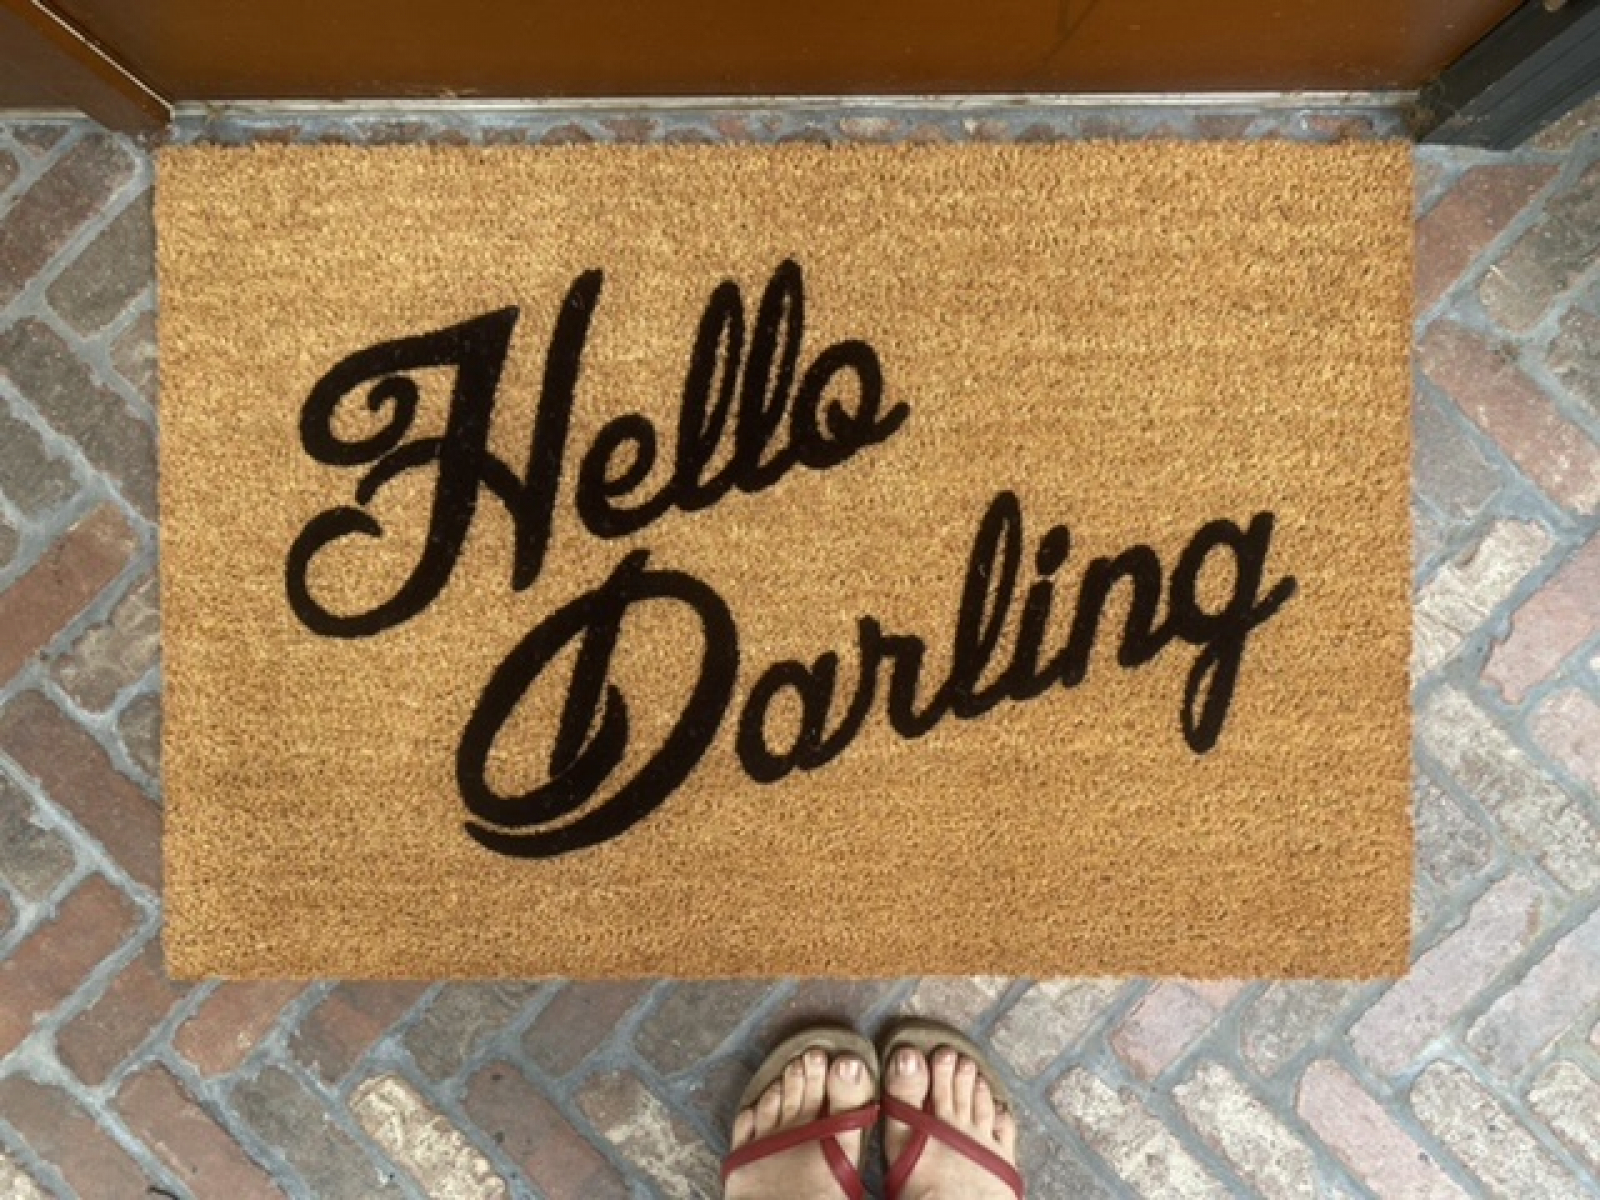 Hello Darling Funny Outdoor Doormat